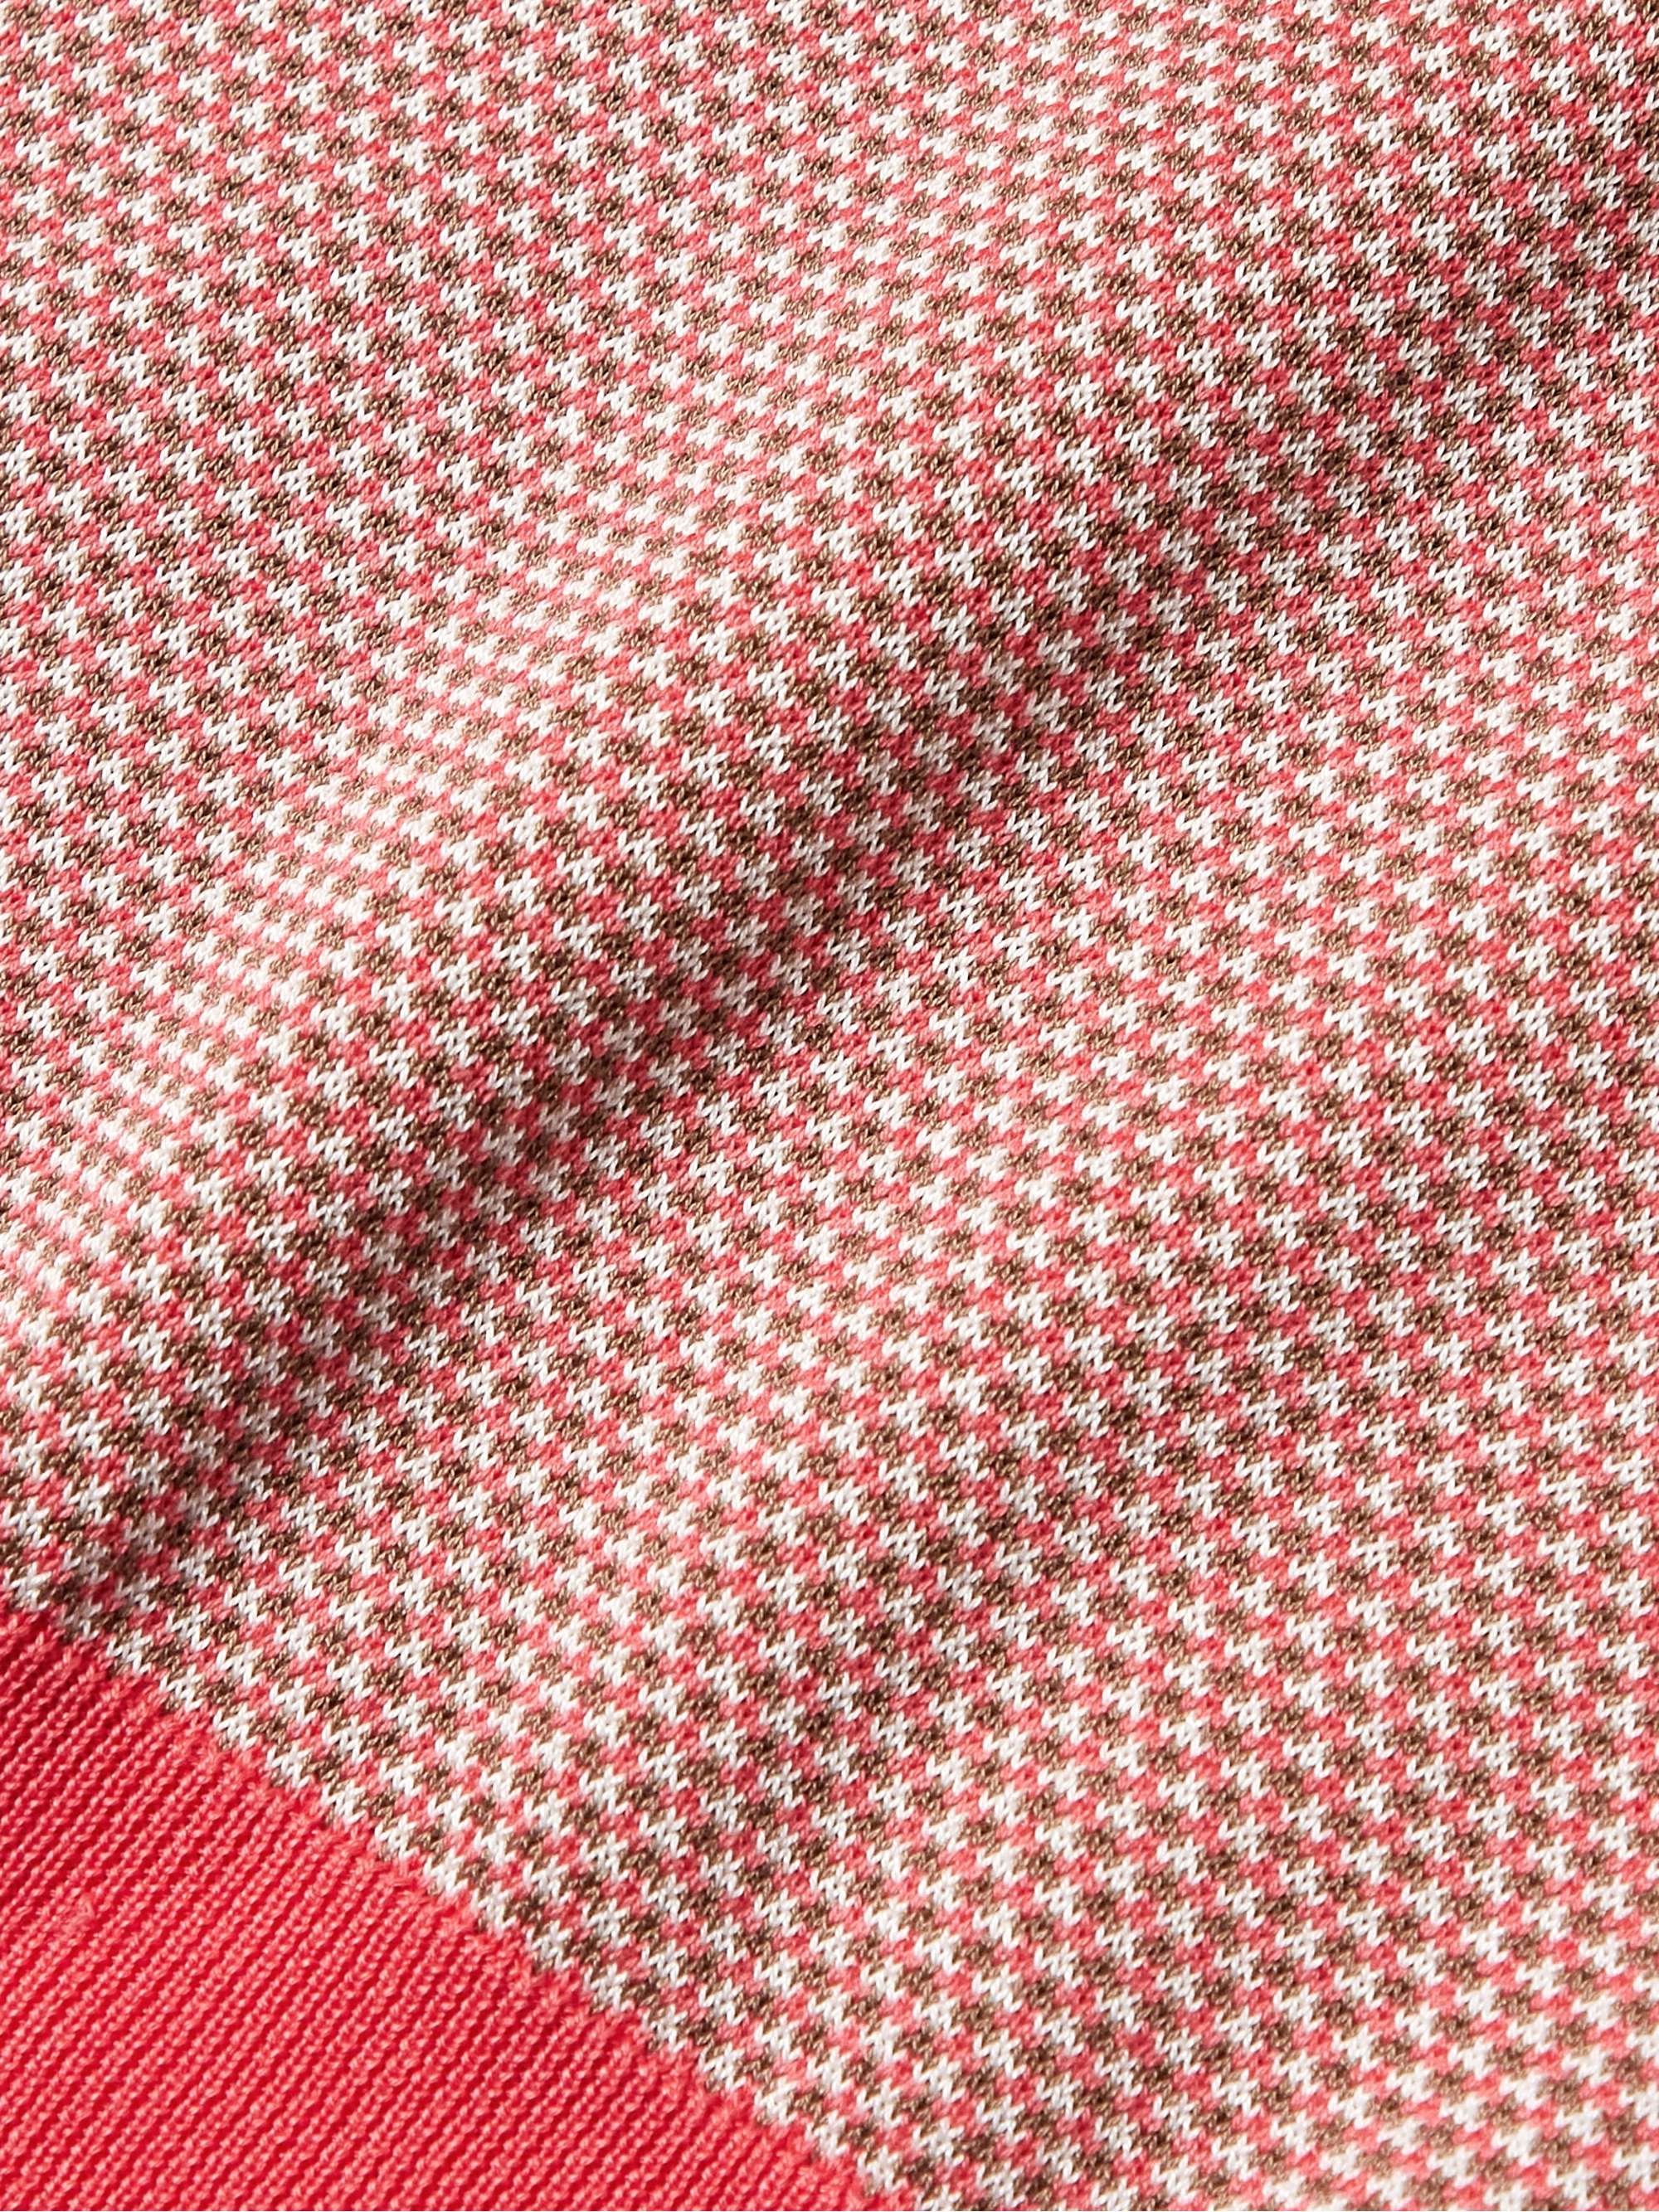 MR P. Slim-Fit Honeycomb-Knit Cotton Polo Shirt